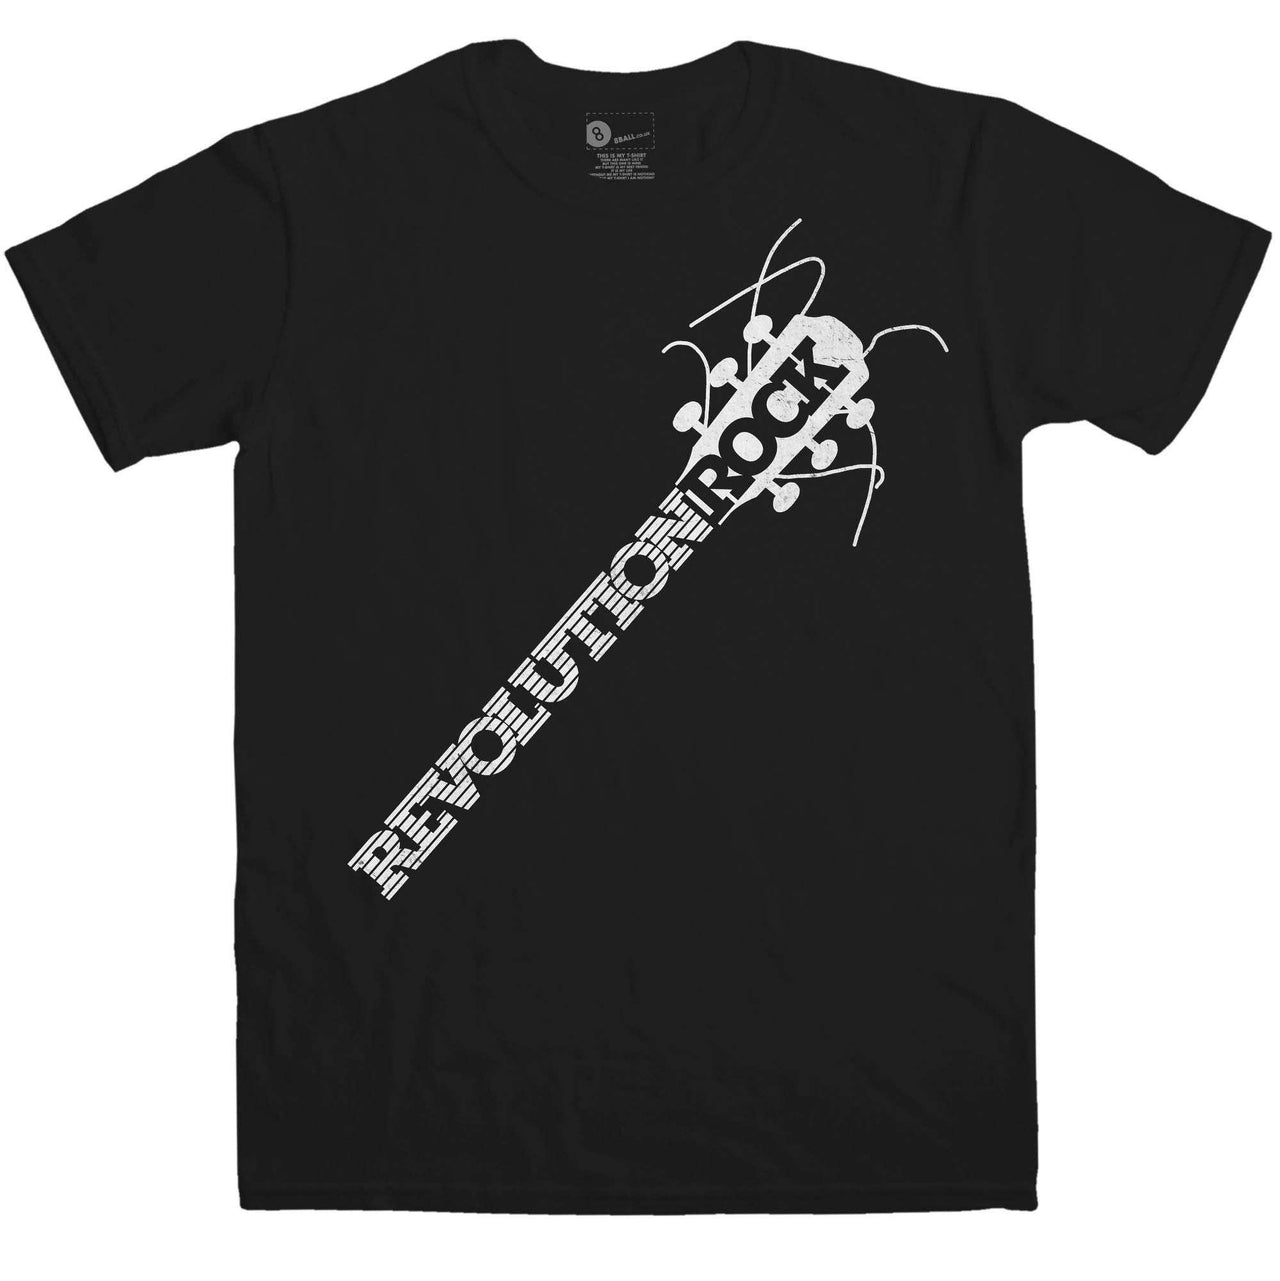 Revolution Rock Unisex T-Shirt For Men And Women As Worn By Joan Jett And Kristen Stewart 8Ball